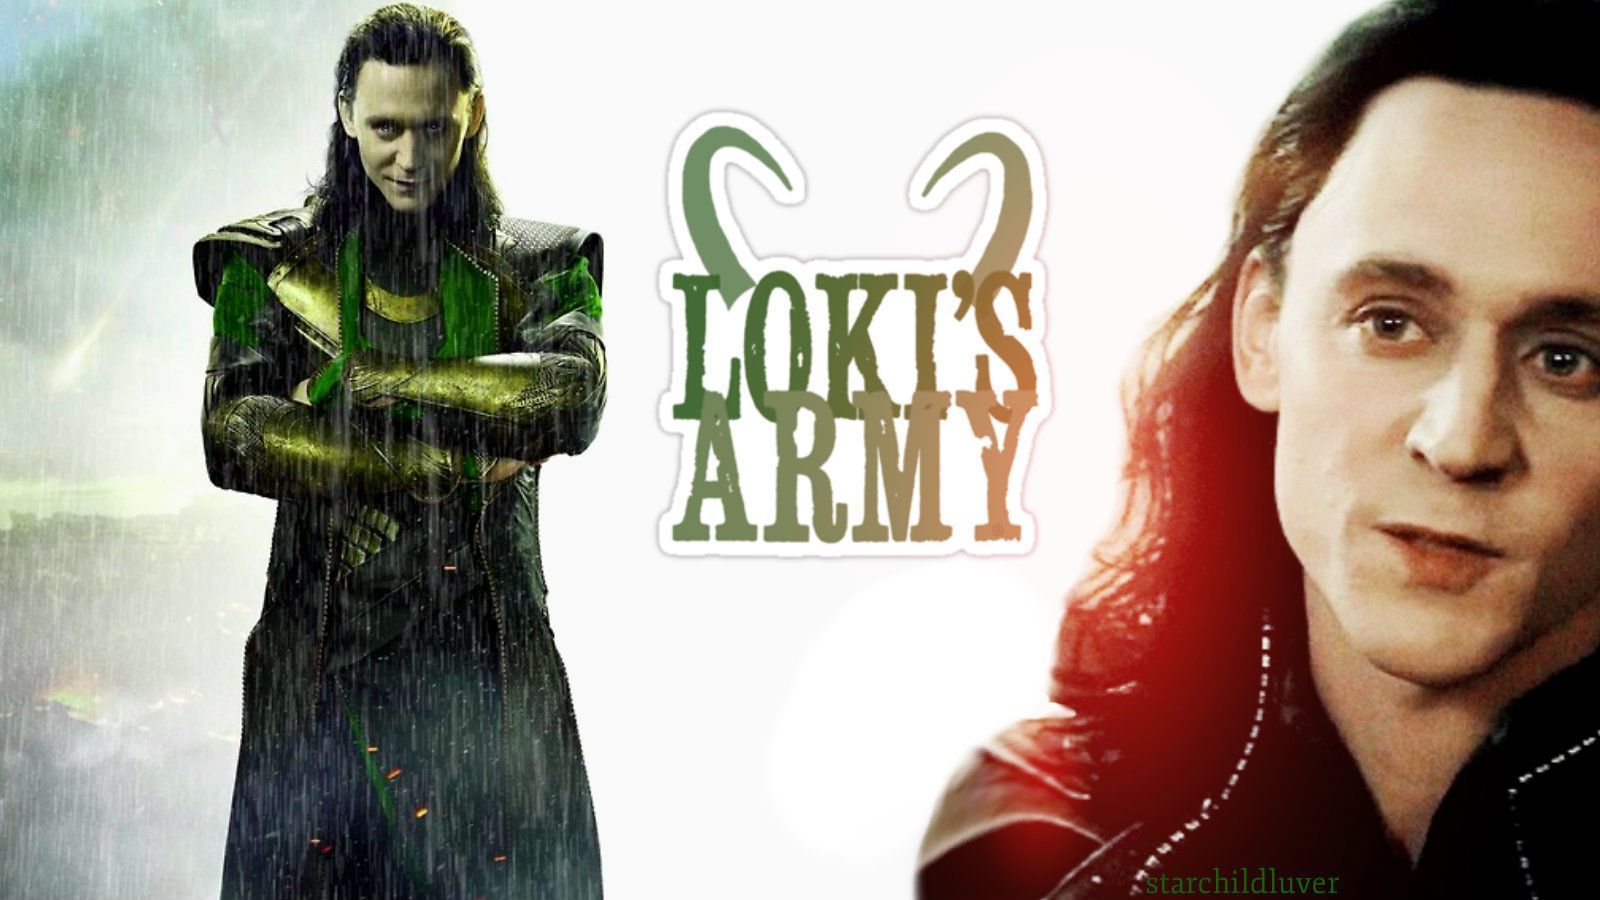 Tom Hiddleston as Loki - Tom Hiddleston Wallpaper (36684992) - Fanpop